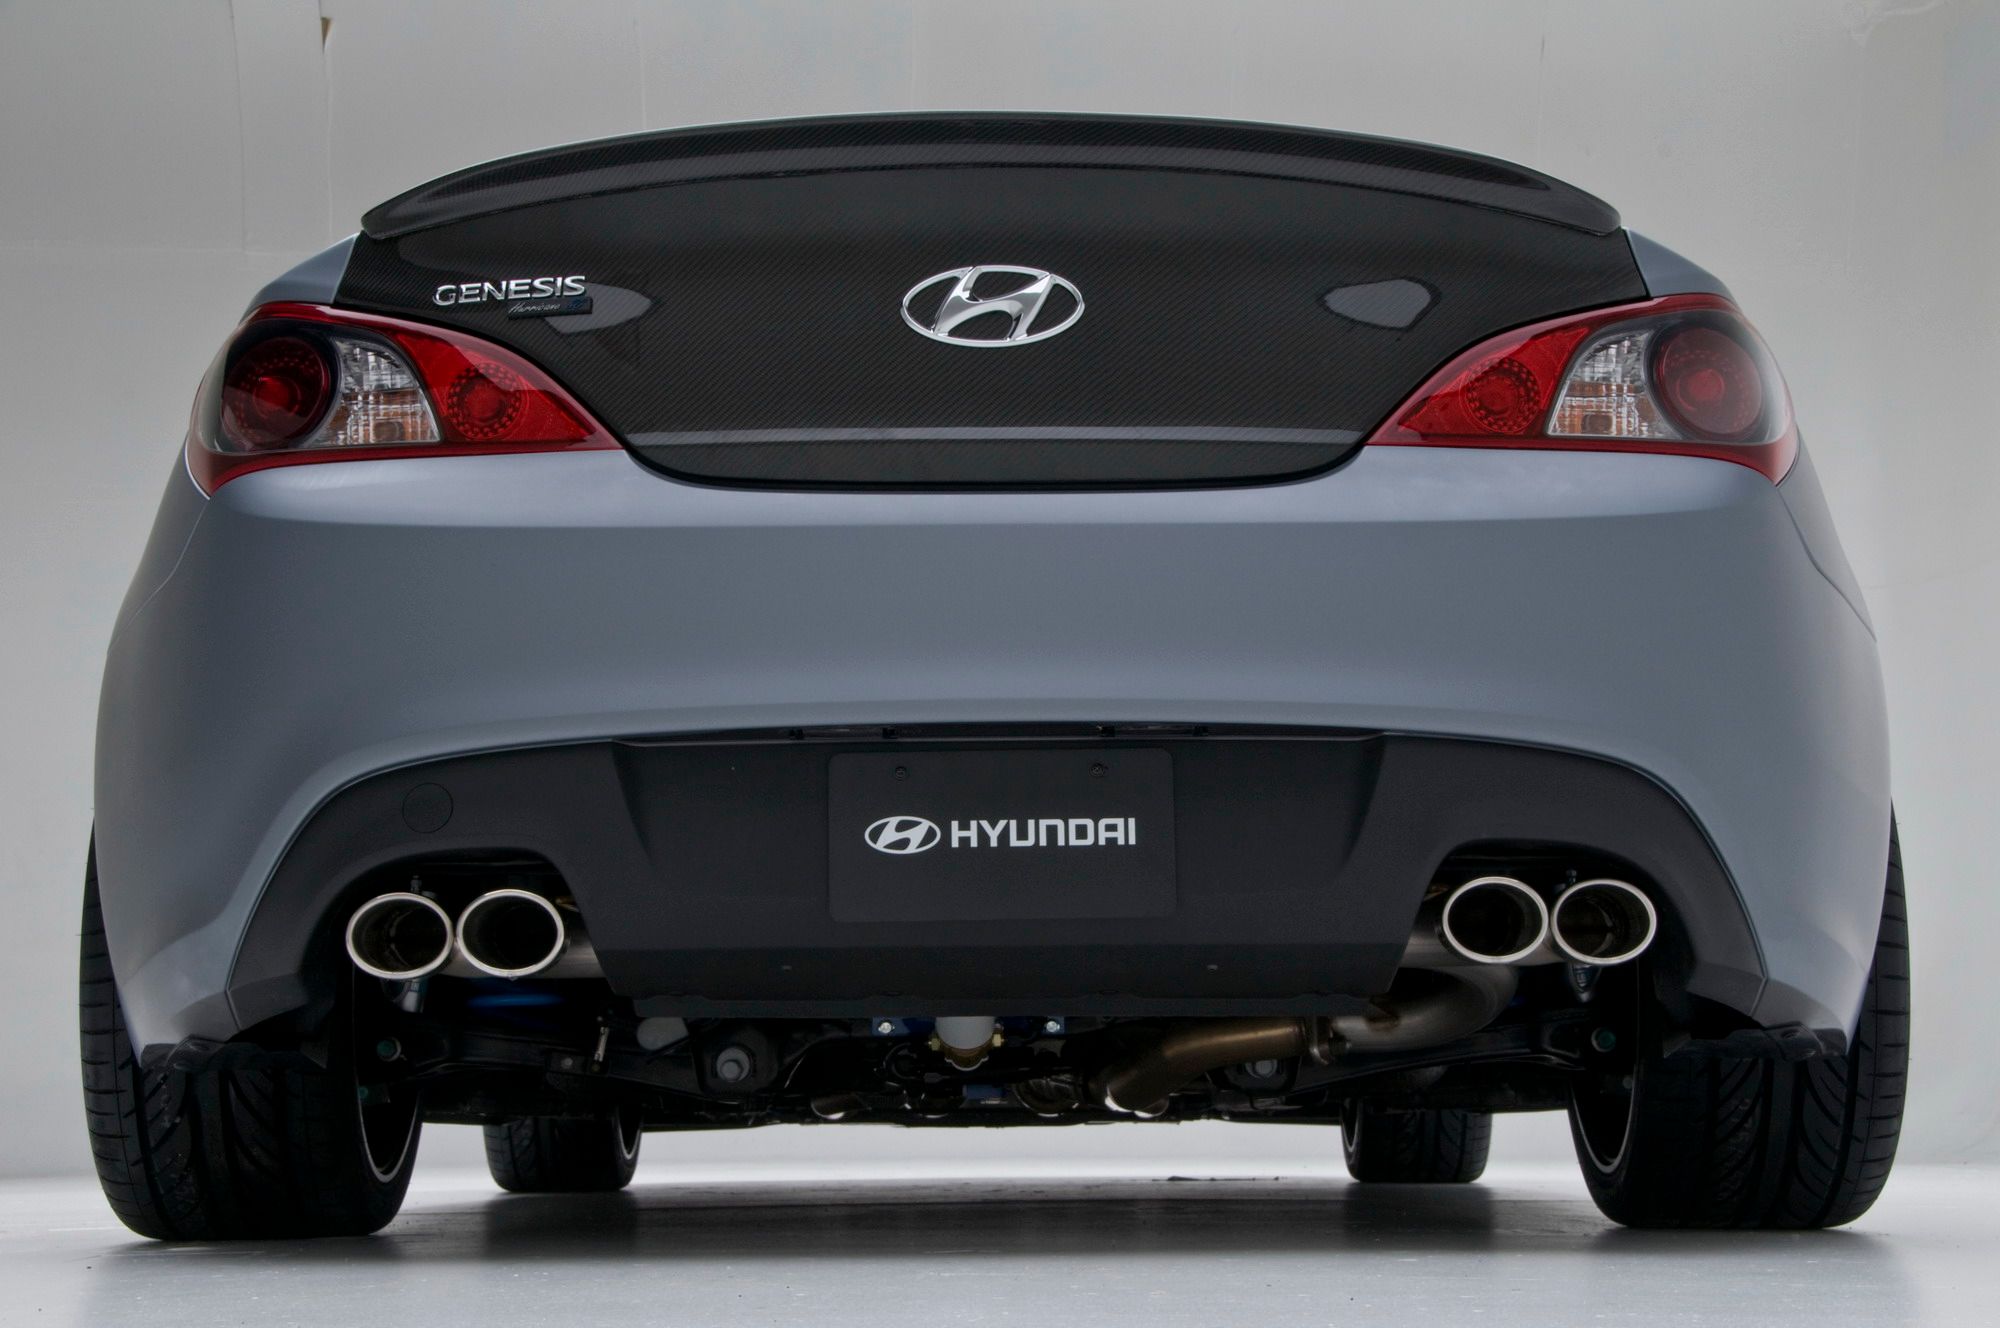 2012 Hyundai Genesis Hurricane SC